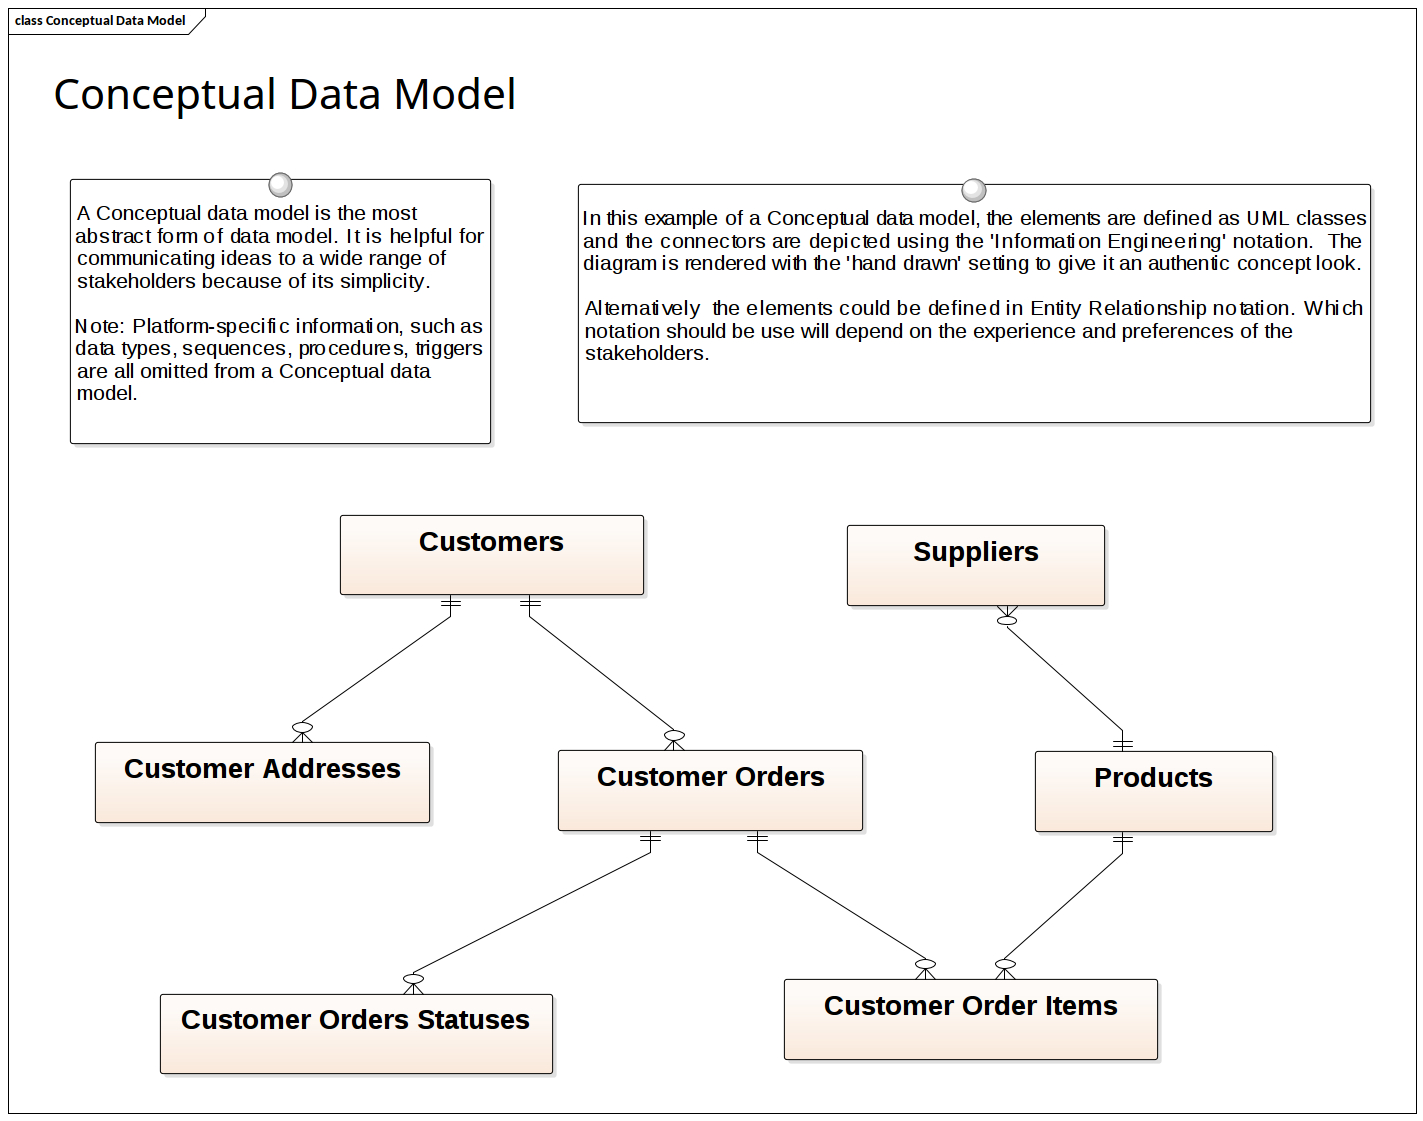 Data Modeling - Conceptual Data Model | Enterprise Architect regarding Data Model Relationship Symbols